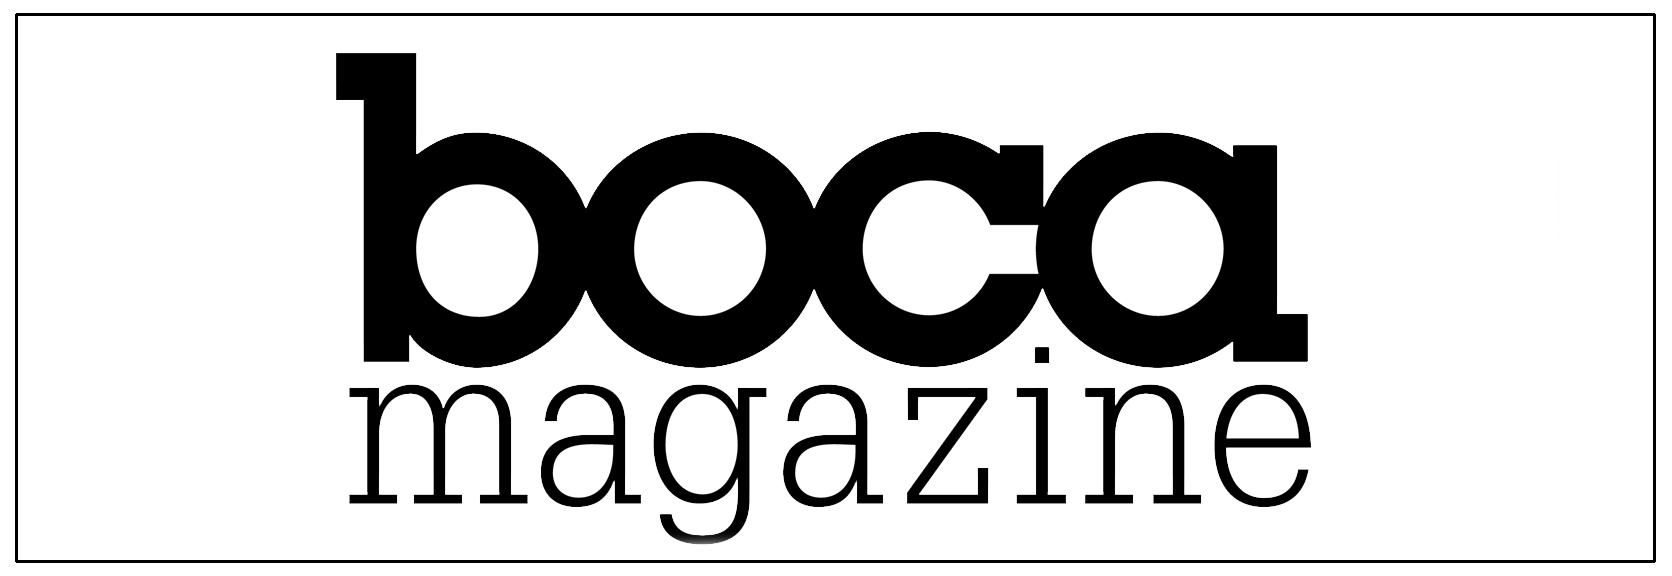 Boca Raton Magazine  |  02.2021